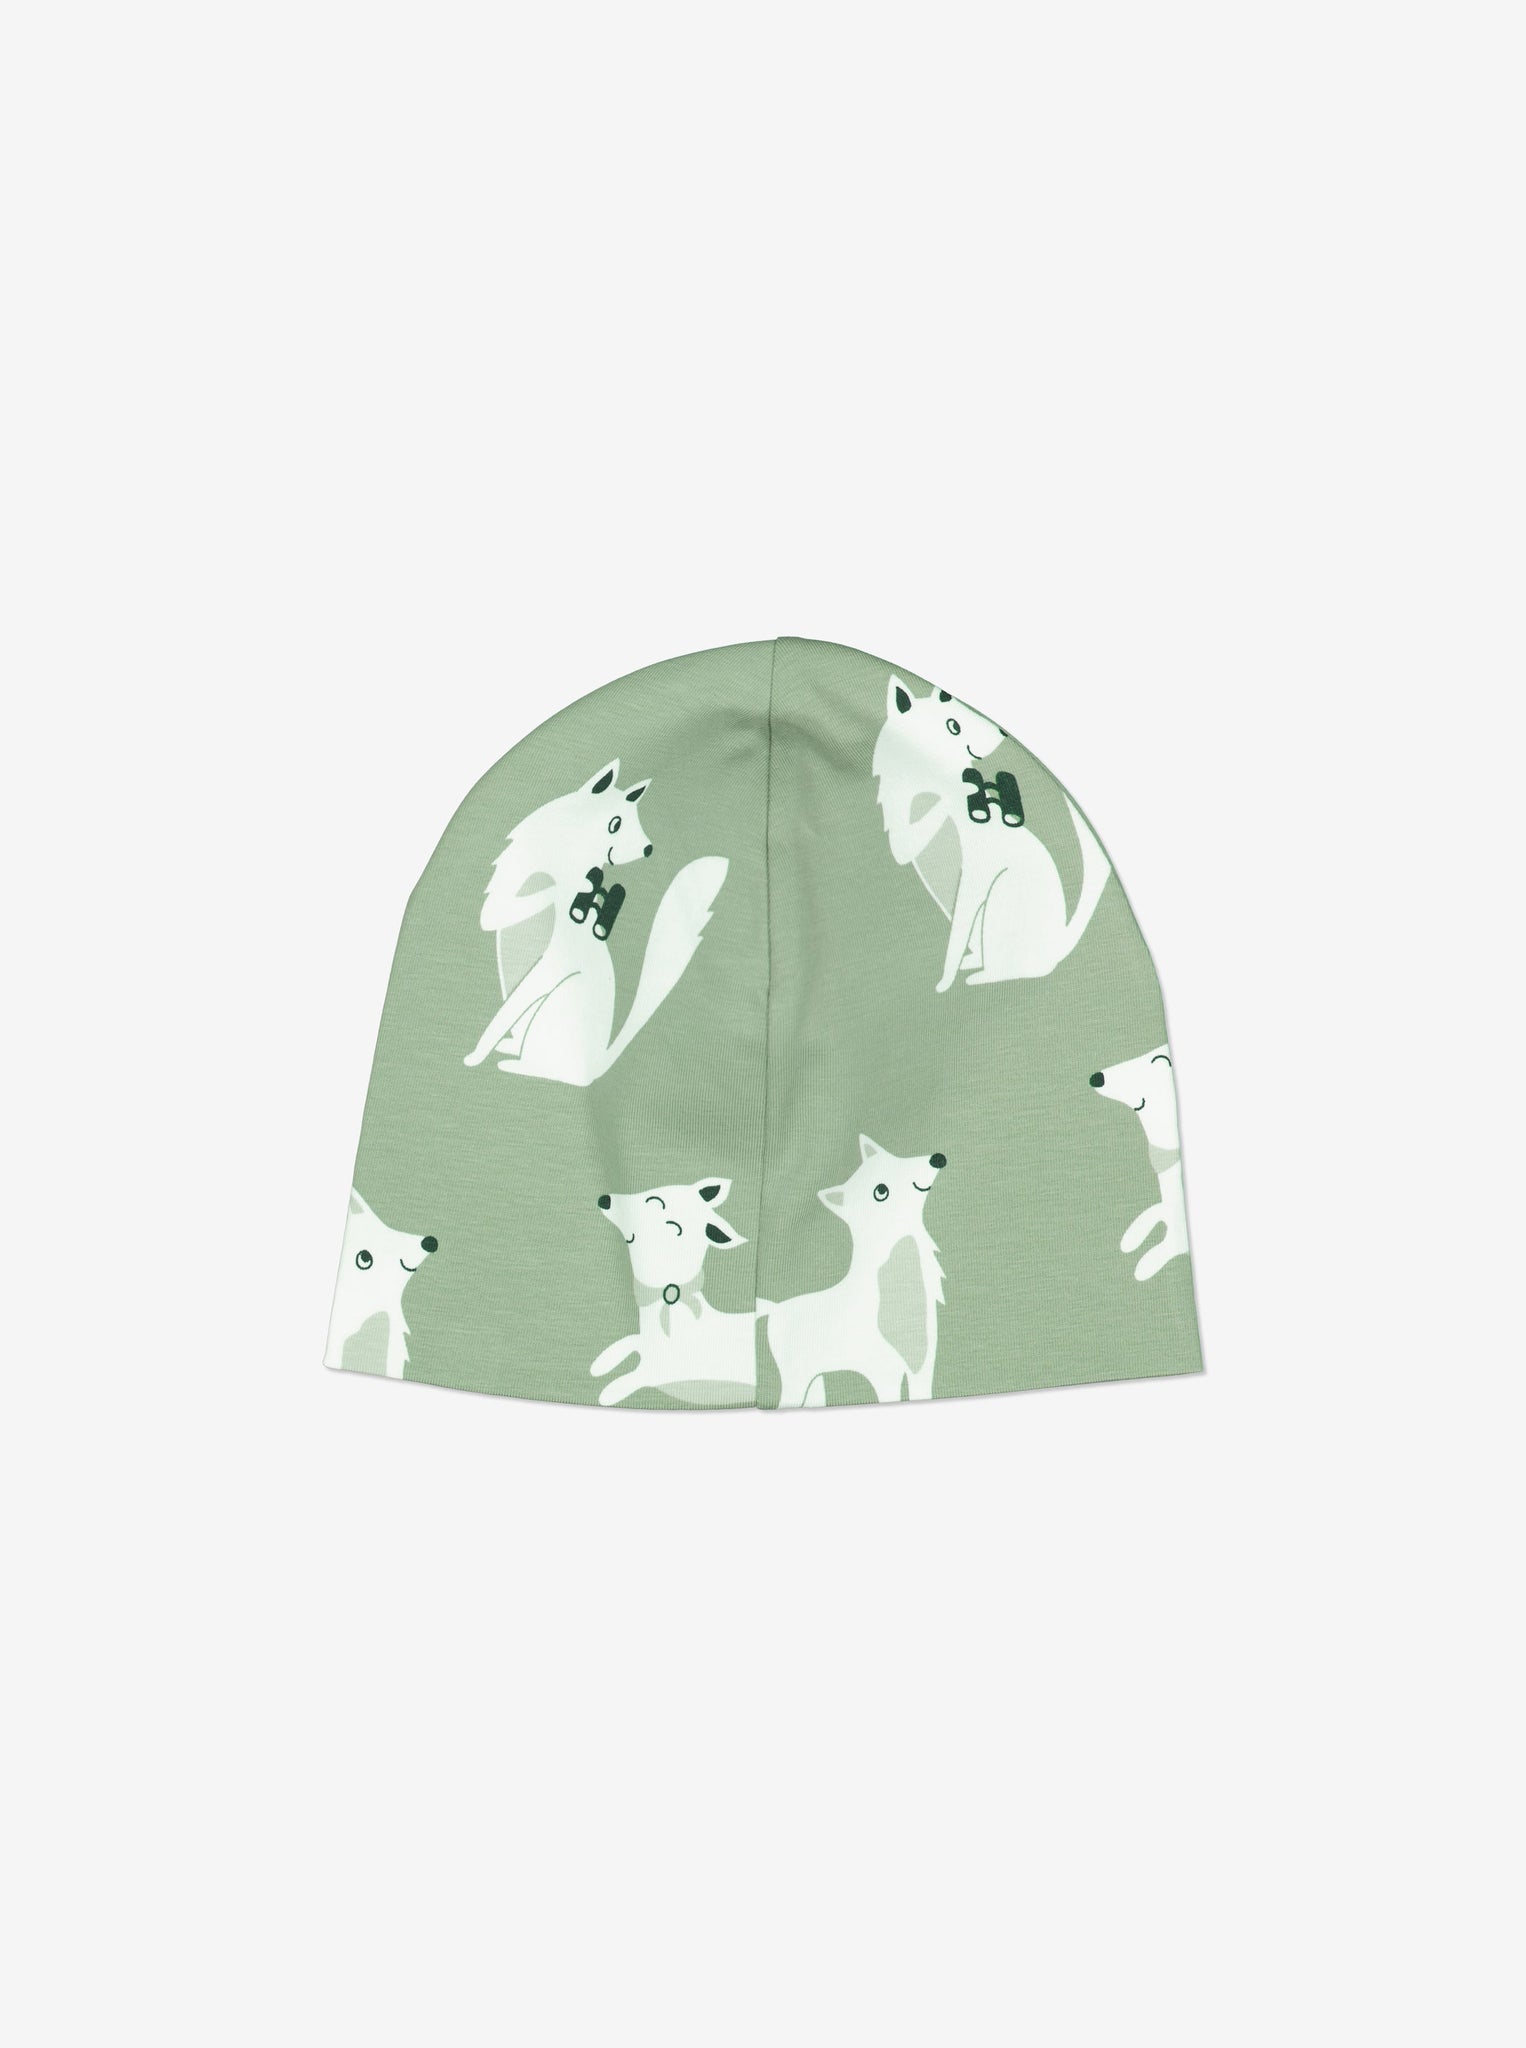  Green Baseball Cap for Kids from Polarn O. Pyret Kidswear. Made using environmentally friendly materials.